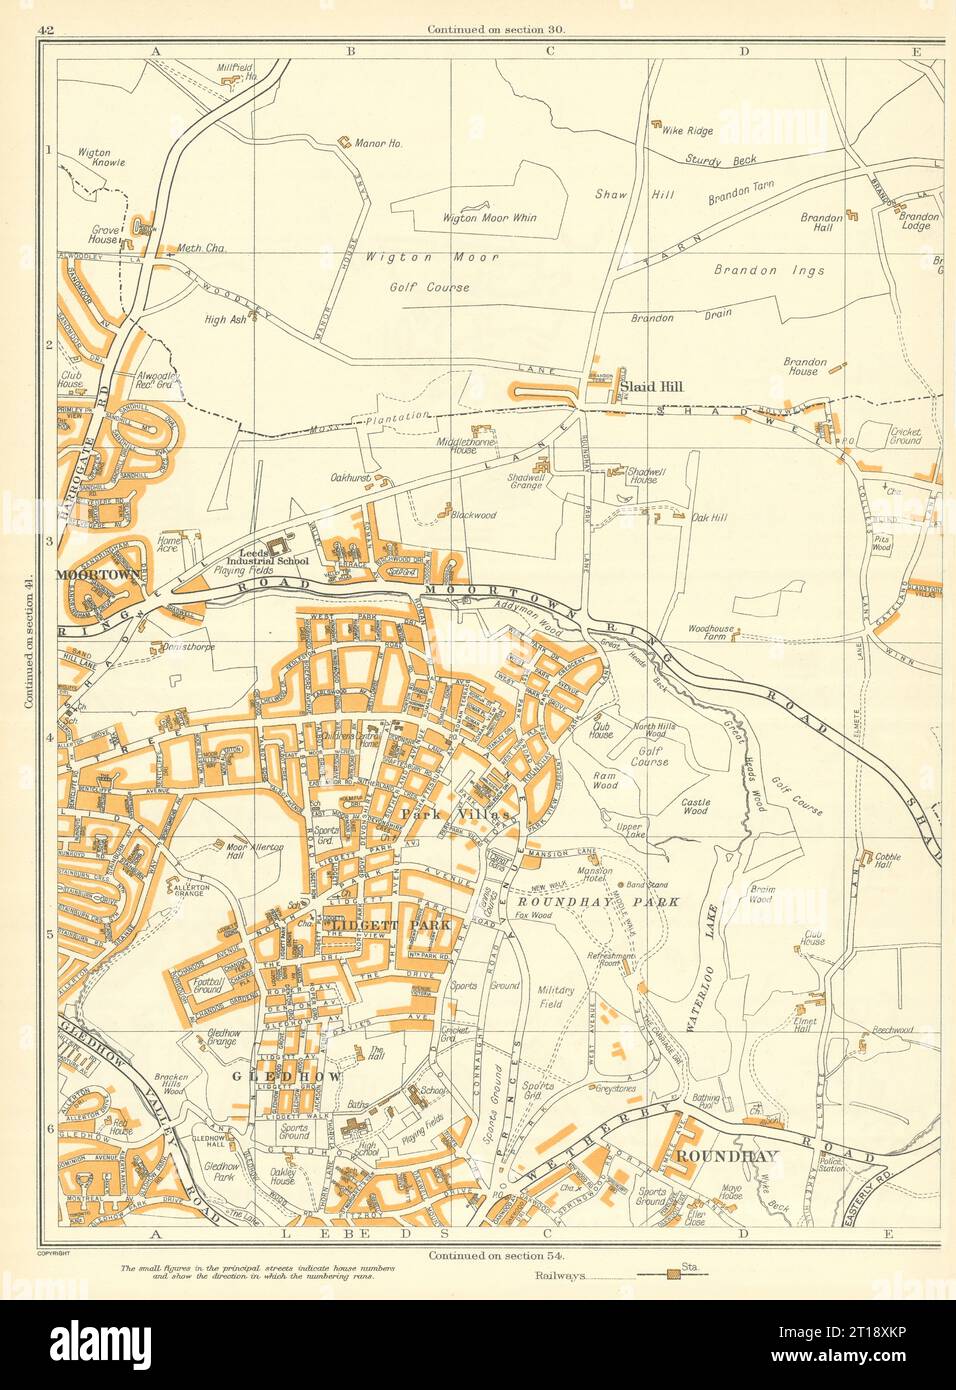 LEEDS Slaid Hill Gledhow Roundhay Lidgett Park Moortown Roundhay 1935 alte Karte Stockfoto